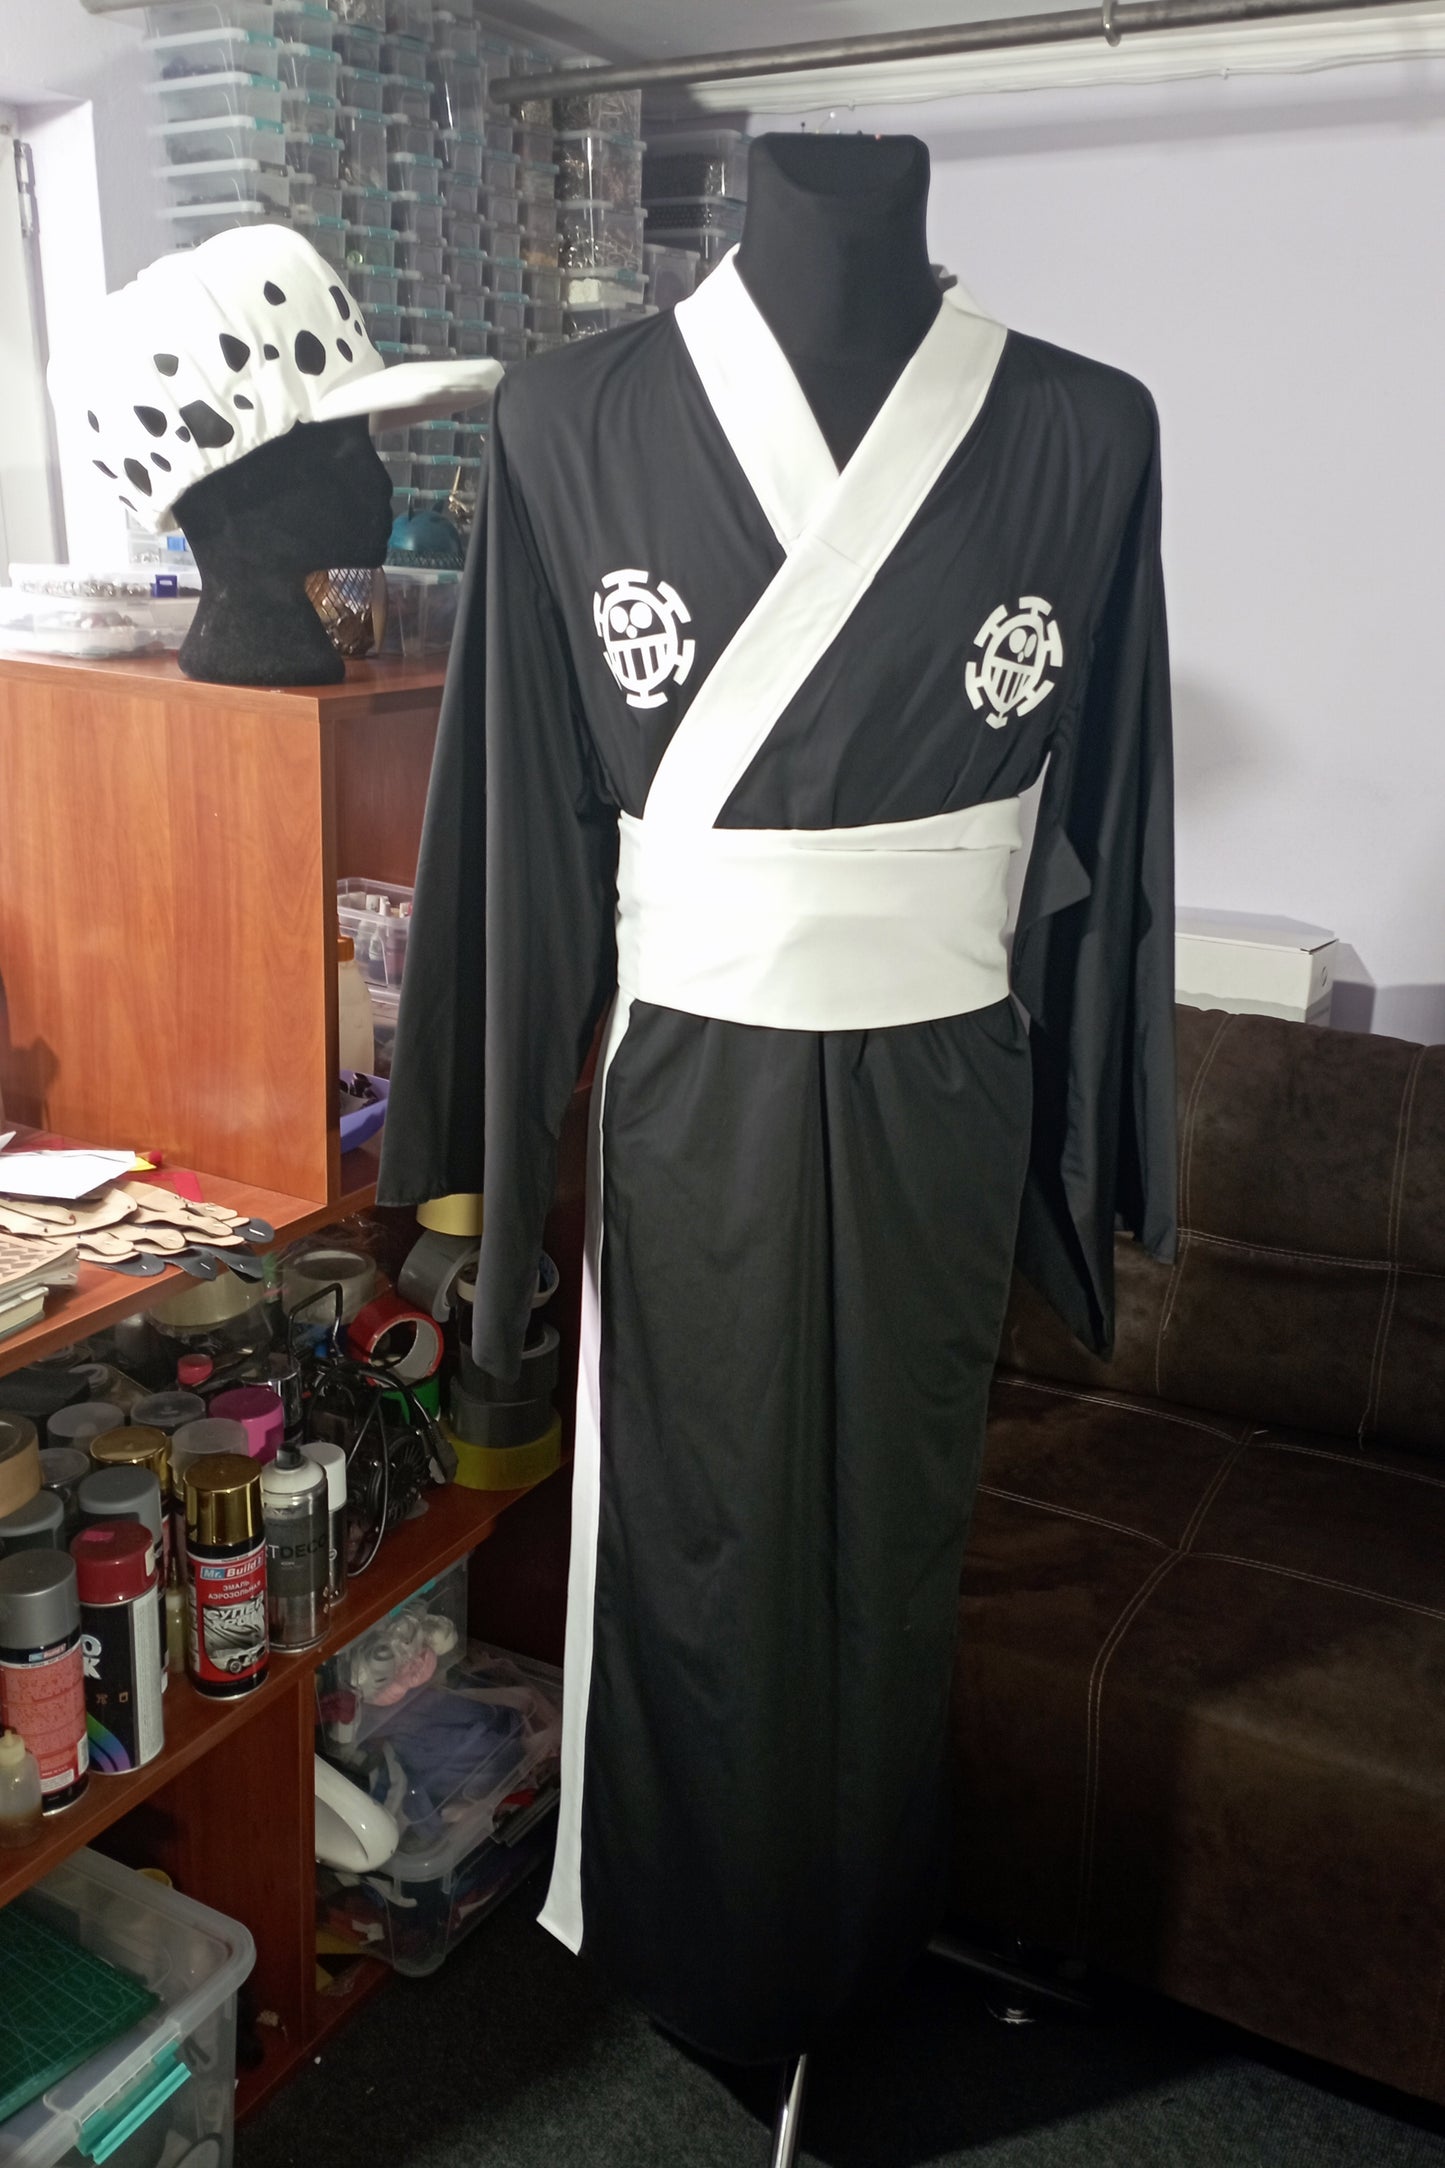 Trafalgar Law cosplay outfit, cosplay kimono